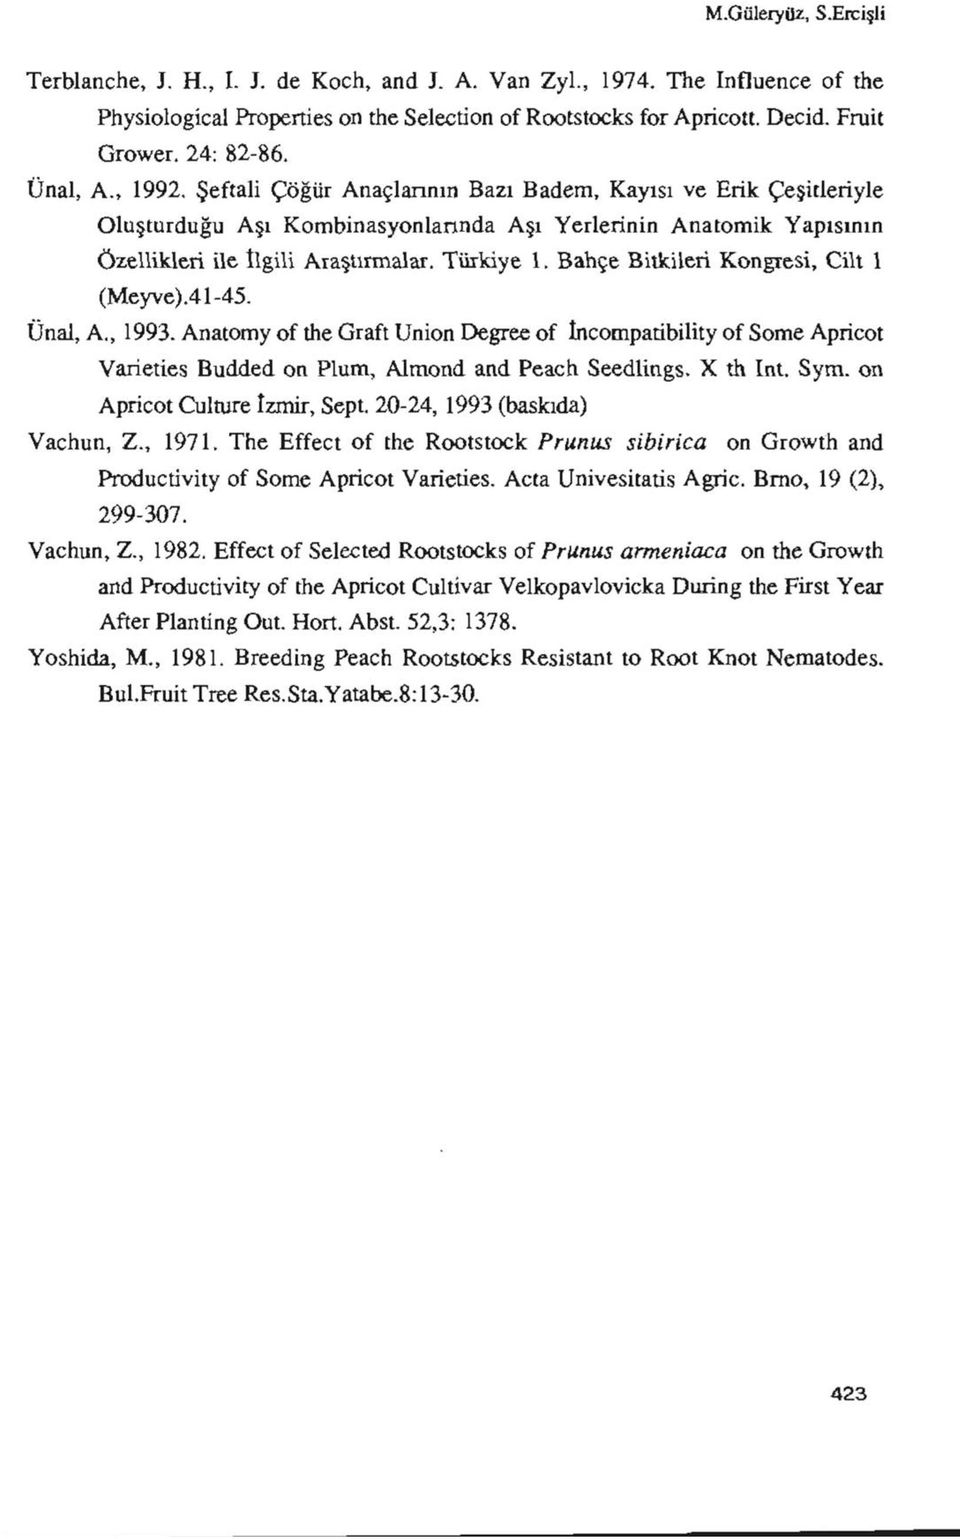 Bahçe Bitkileri Kongresi, Cilt 1 (Meyve).41-45. Ünal, A., 1993. Anatomy of the Graft Union Degree of Incompatibility of Some Aprieot Varieties Budded on Plum, Almond and Peach Seedlings. X th Int.